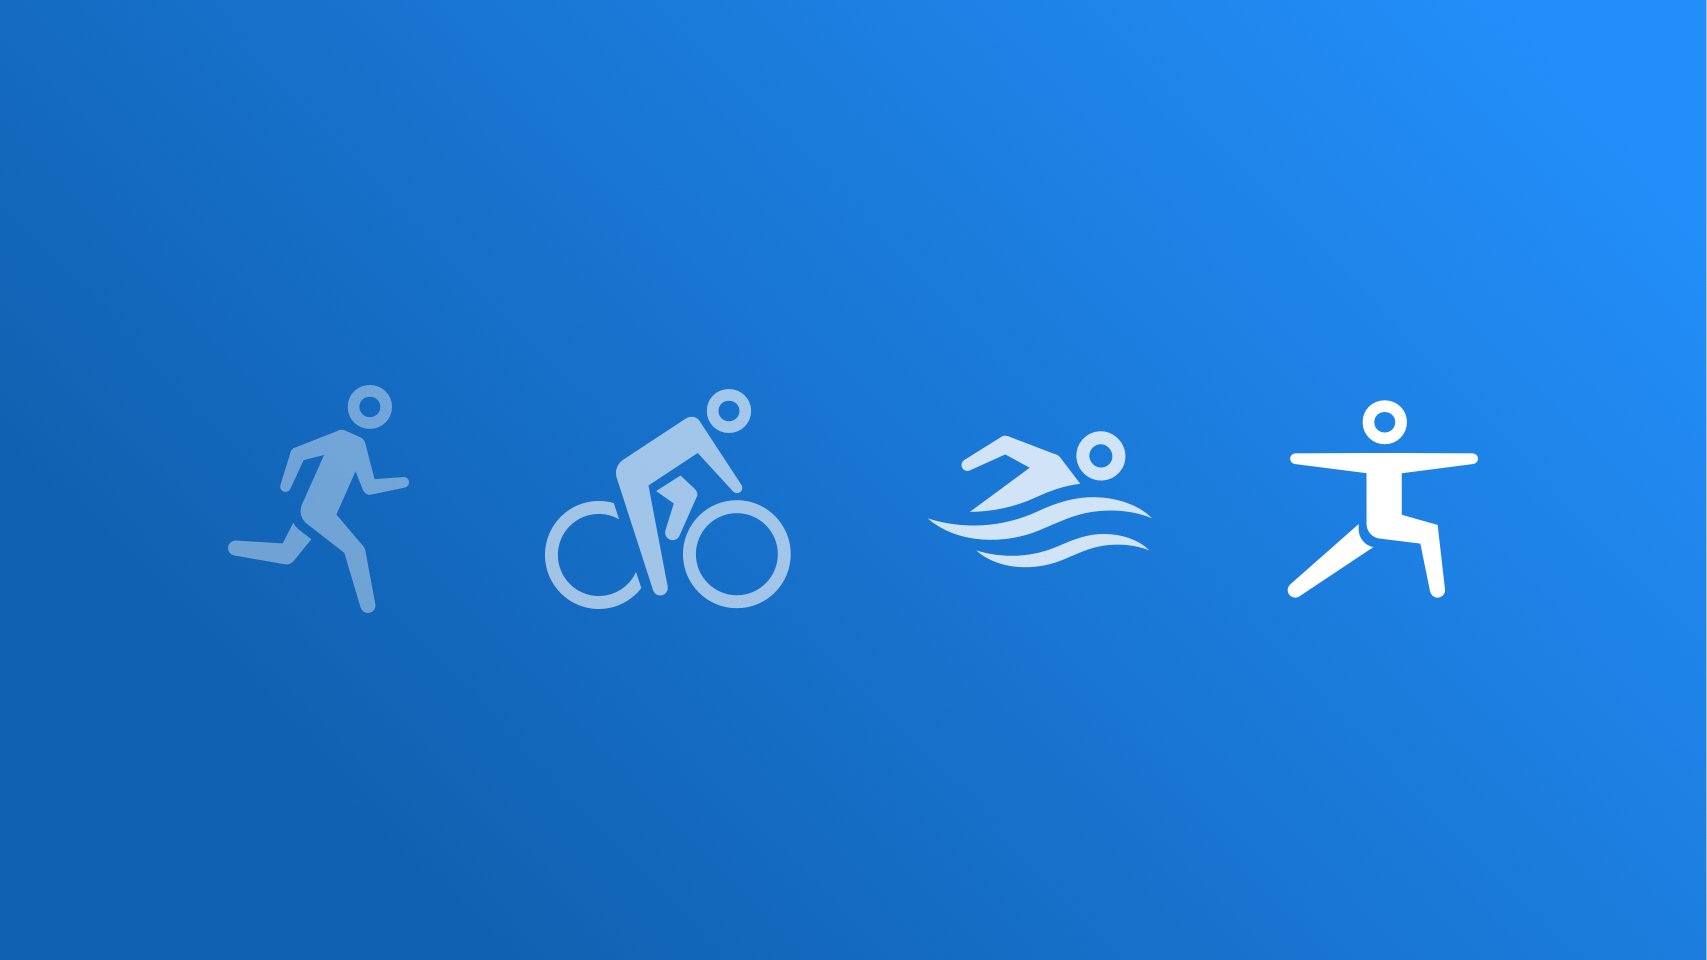 Icons of different sport disciplines: running, biking, swimming, athletics